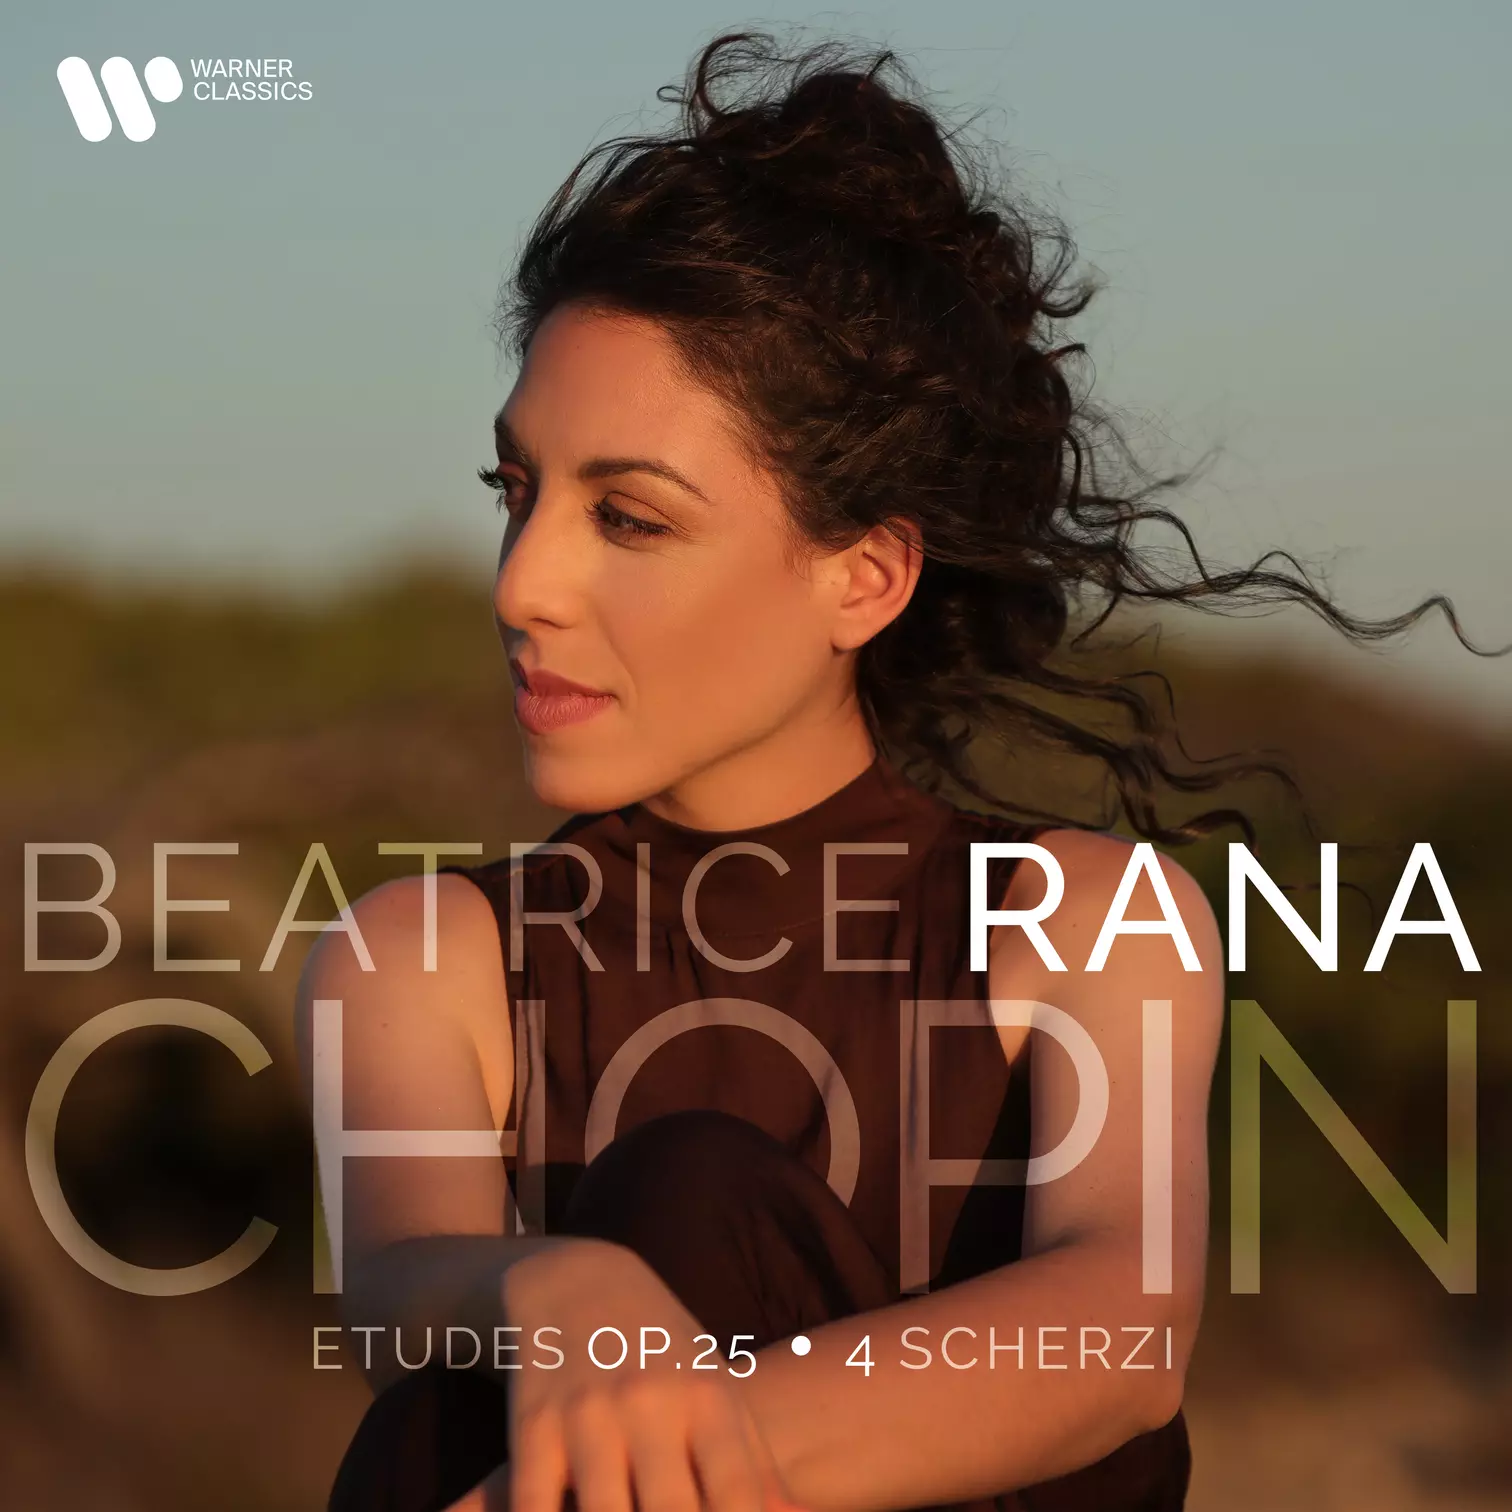 Chopin Études Op. 25 – 4 Scherzi Beatrice Rana